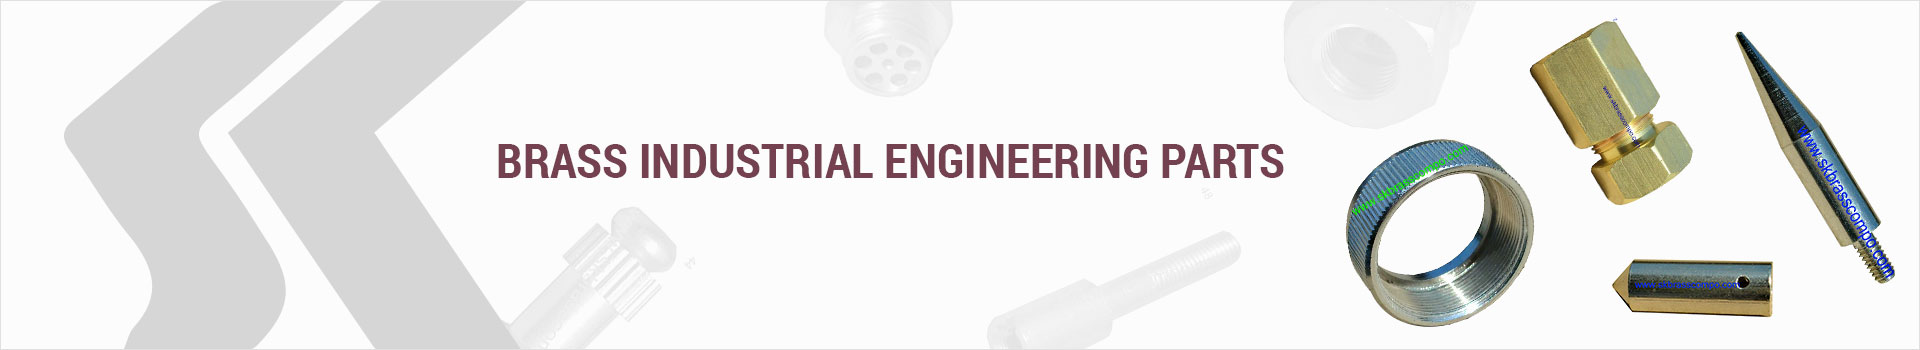 Industrial Engineering Parts